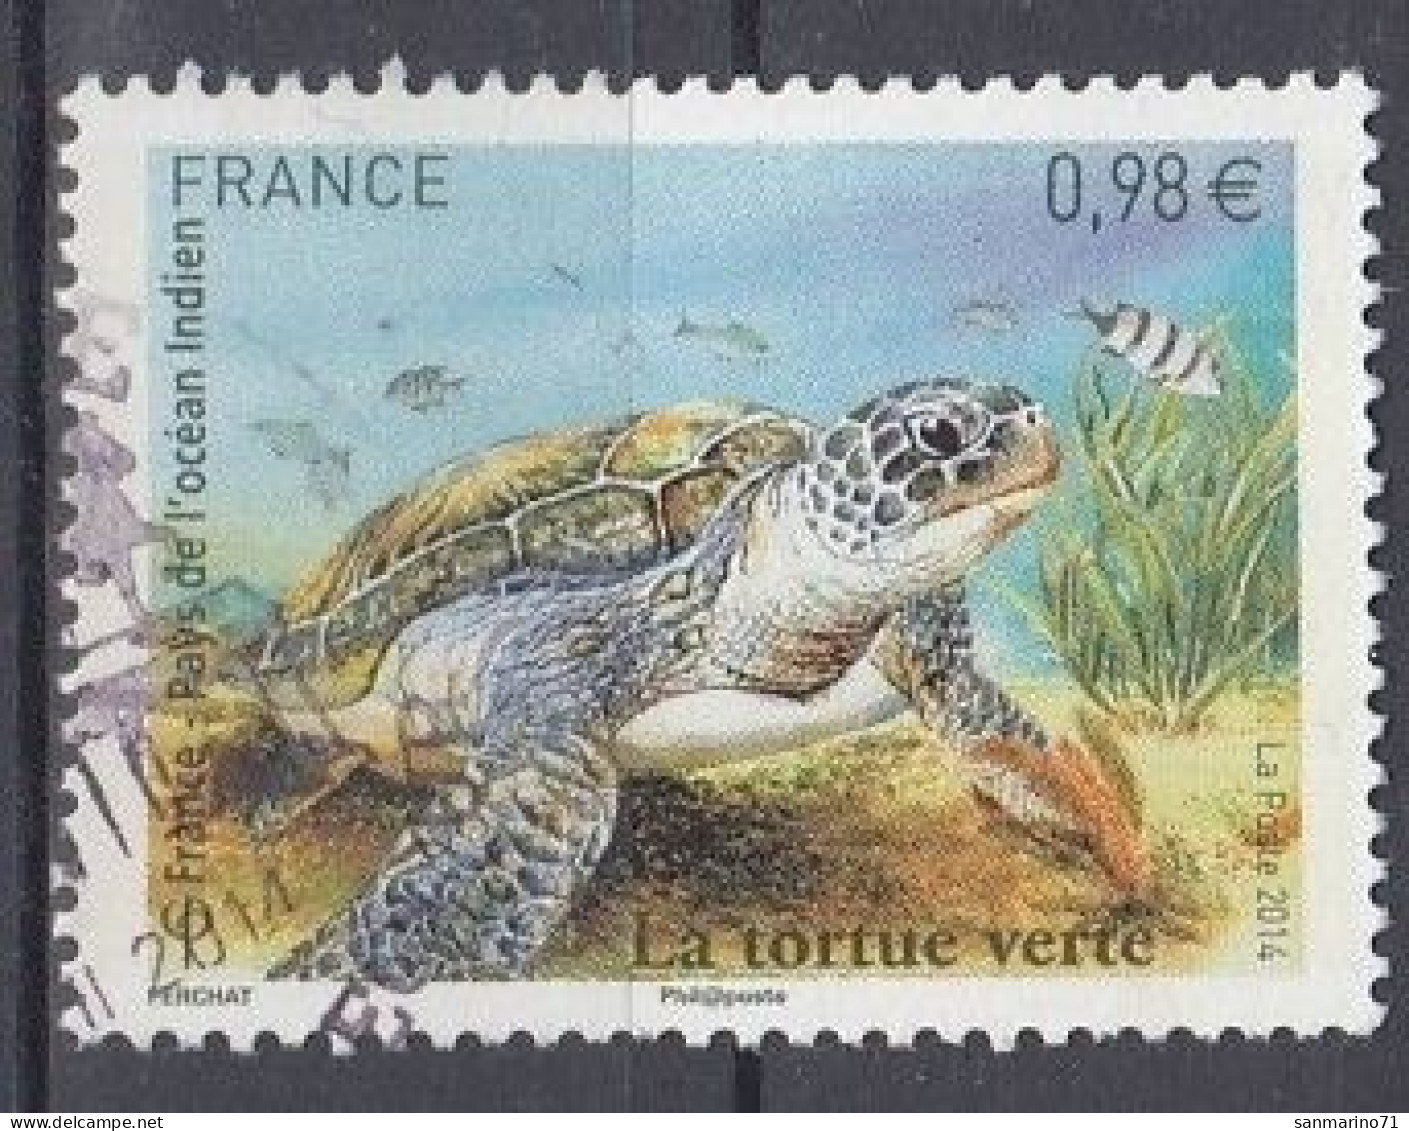 FRANCE 5996,used,falc Hinged - Schildpadden